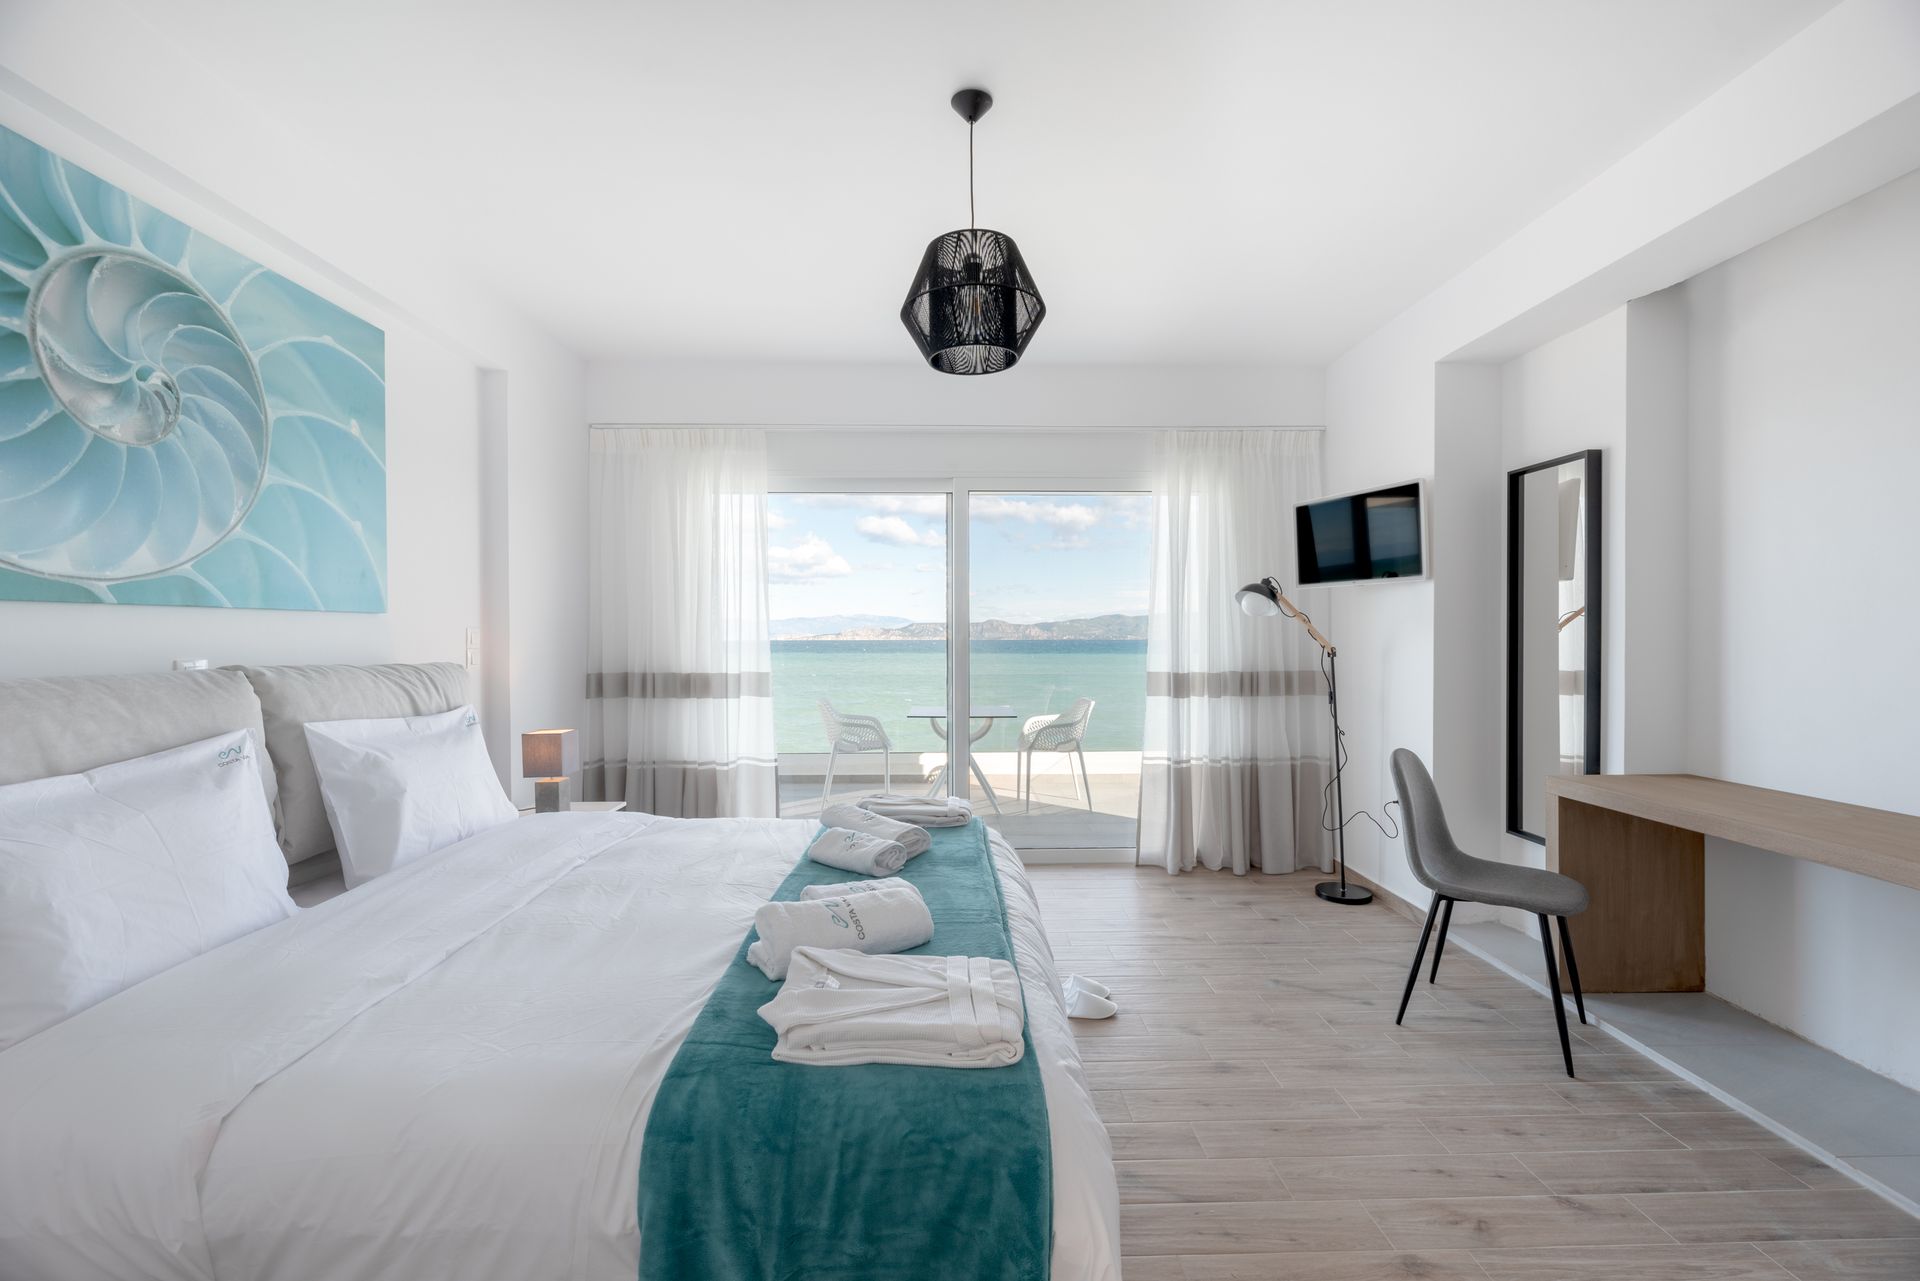 Costa Vasia Suites &amp; Apartments - Βραχάτι Κορινθίας ✦ 2 Ημέρες (1 Διανυκτέρευση) ✦ 4 άτομα ✦ 1 ✦ έως 30/04/2023 ✦ Κοντά σε Παραλία!